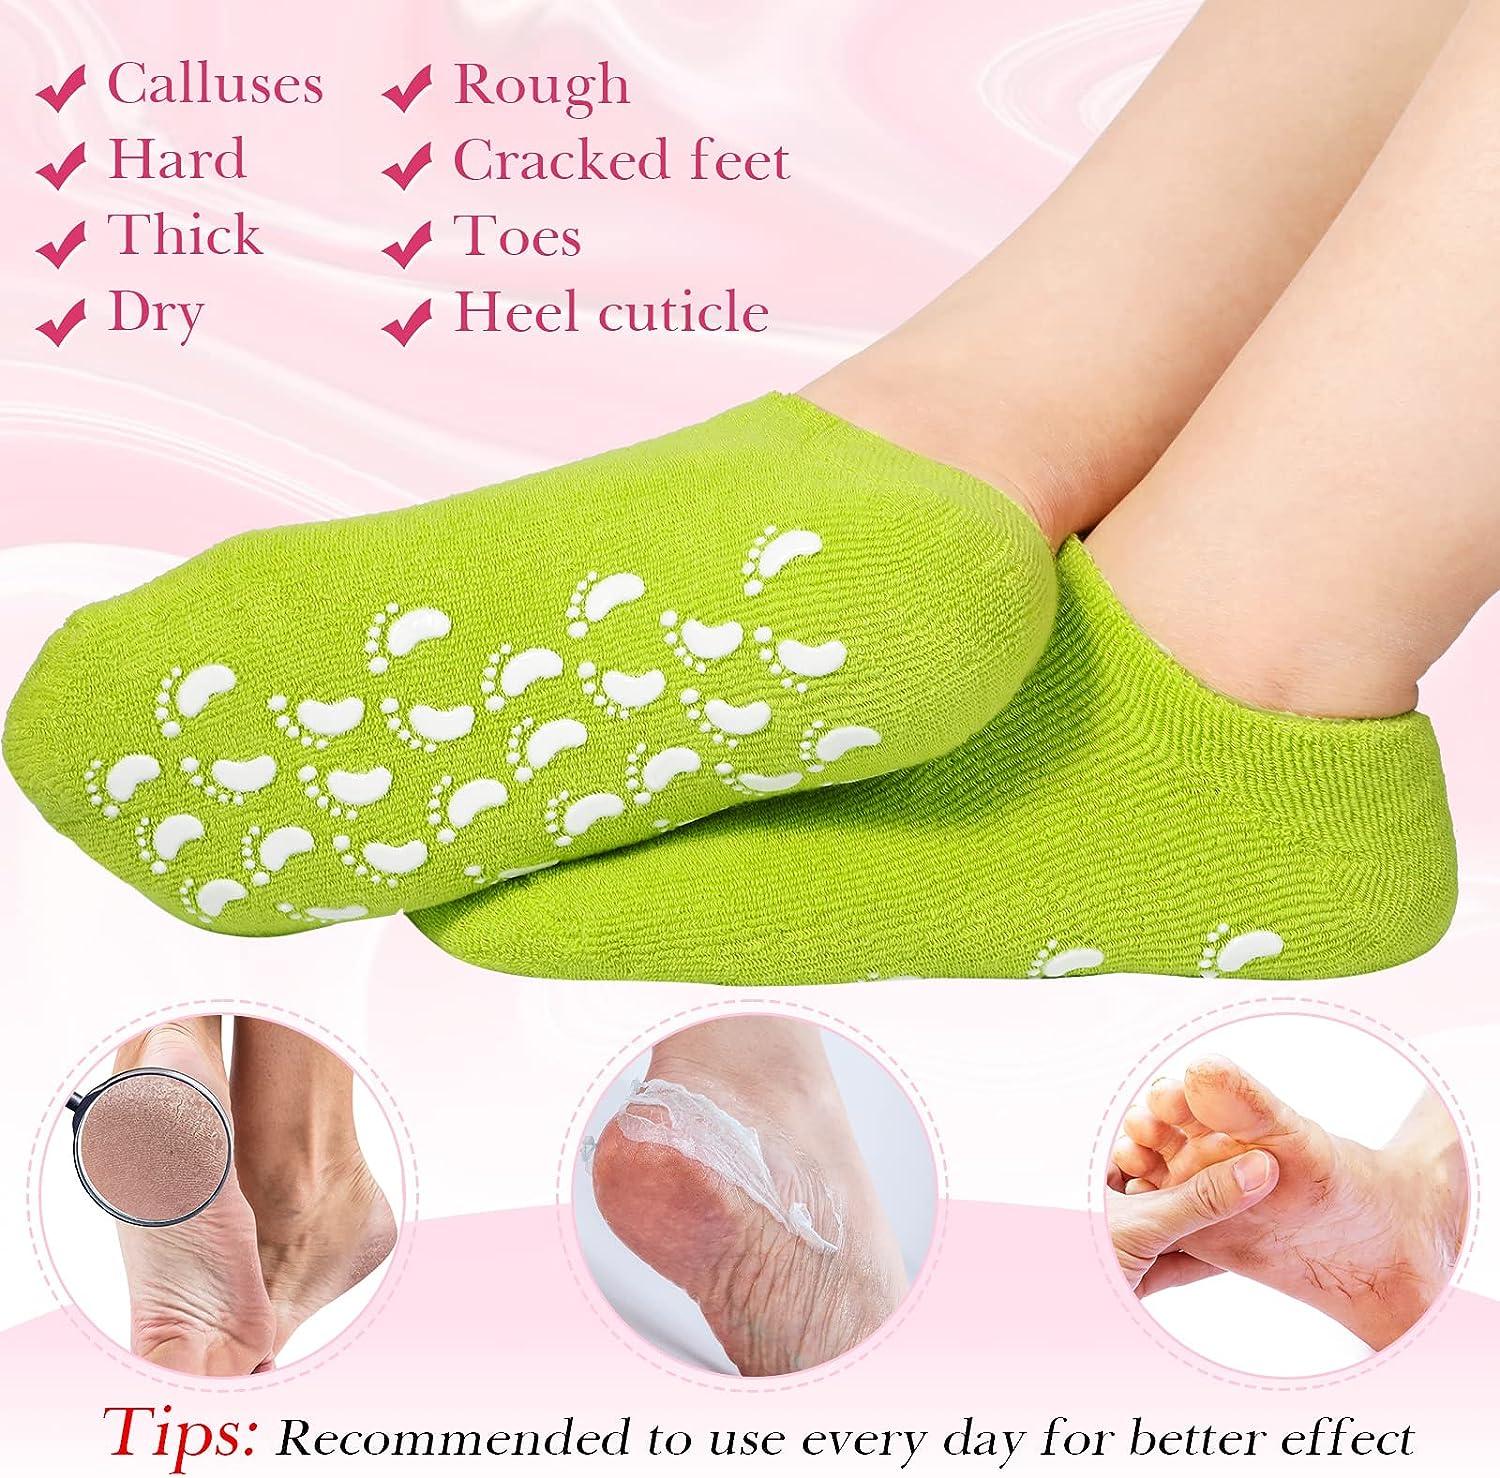 8 Pairs Moisturizing Gel Socks Feet Care Gel Spa Socks Foot